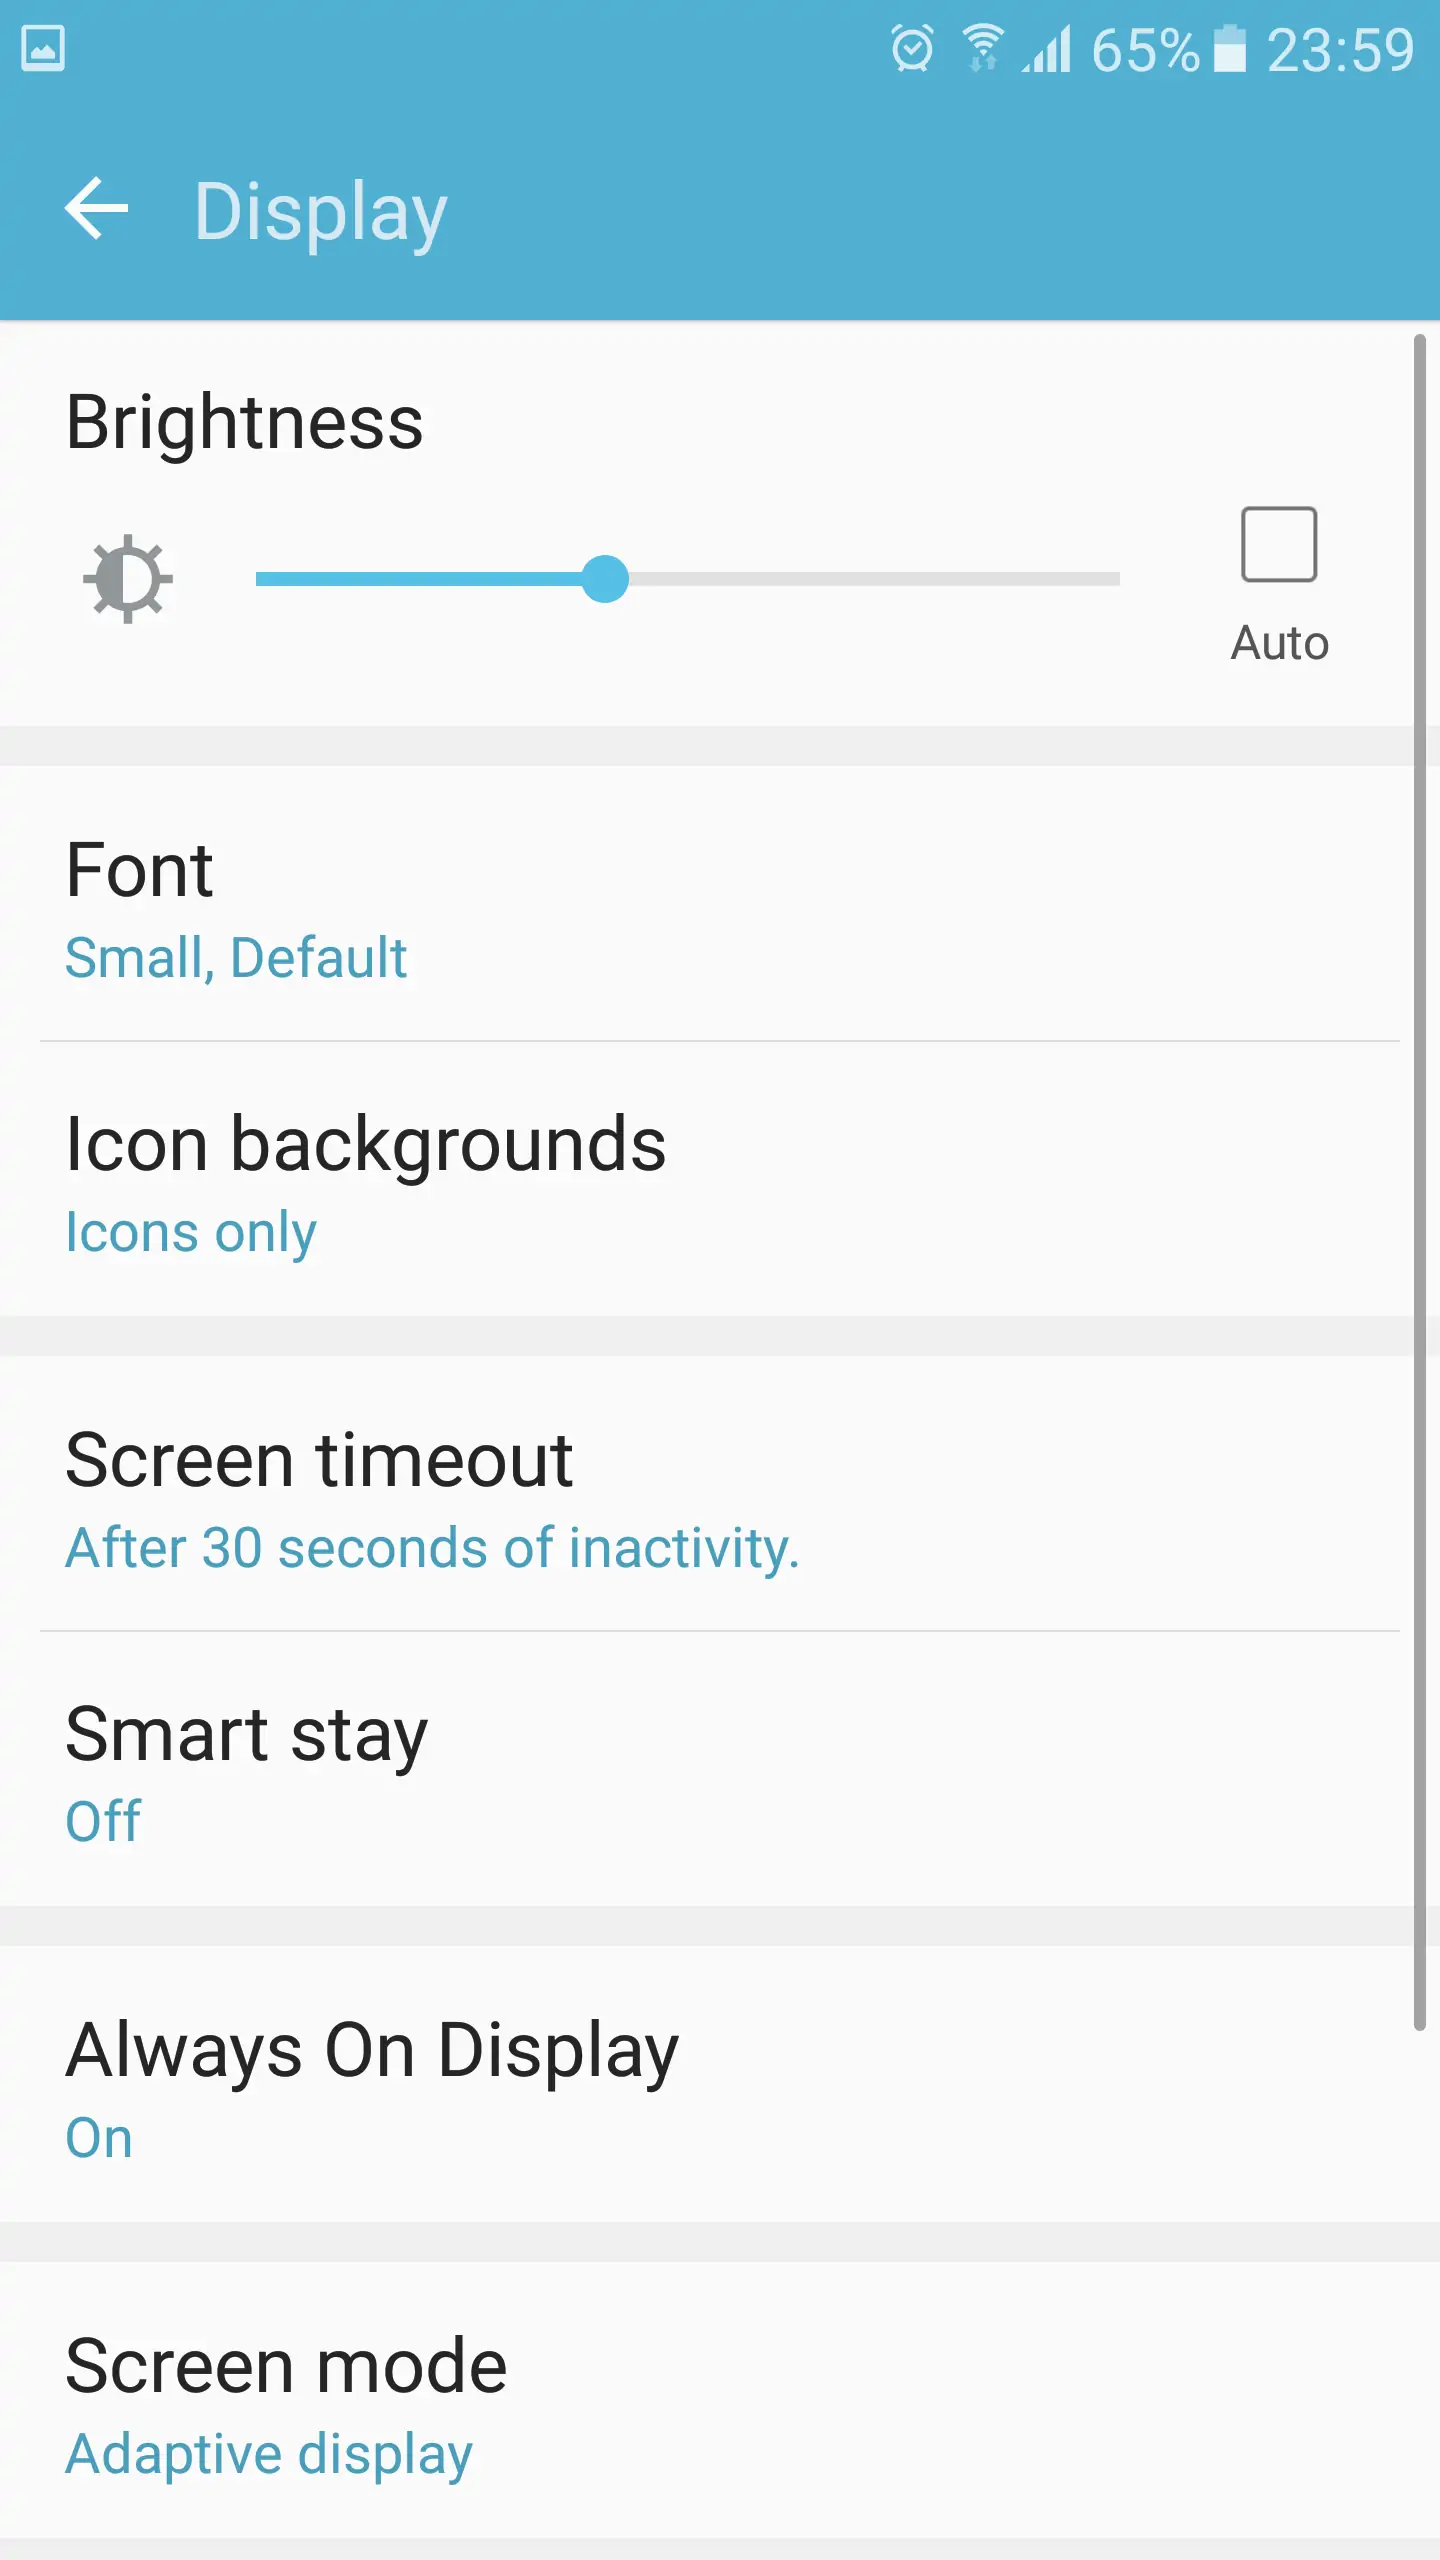 Samsung Galaxy S7 - Display settings